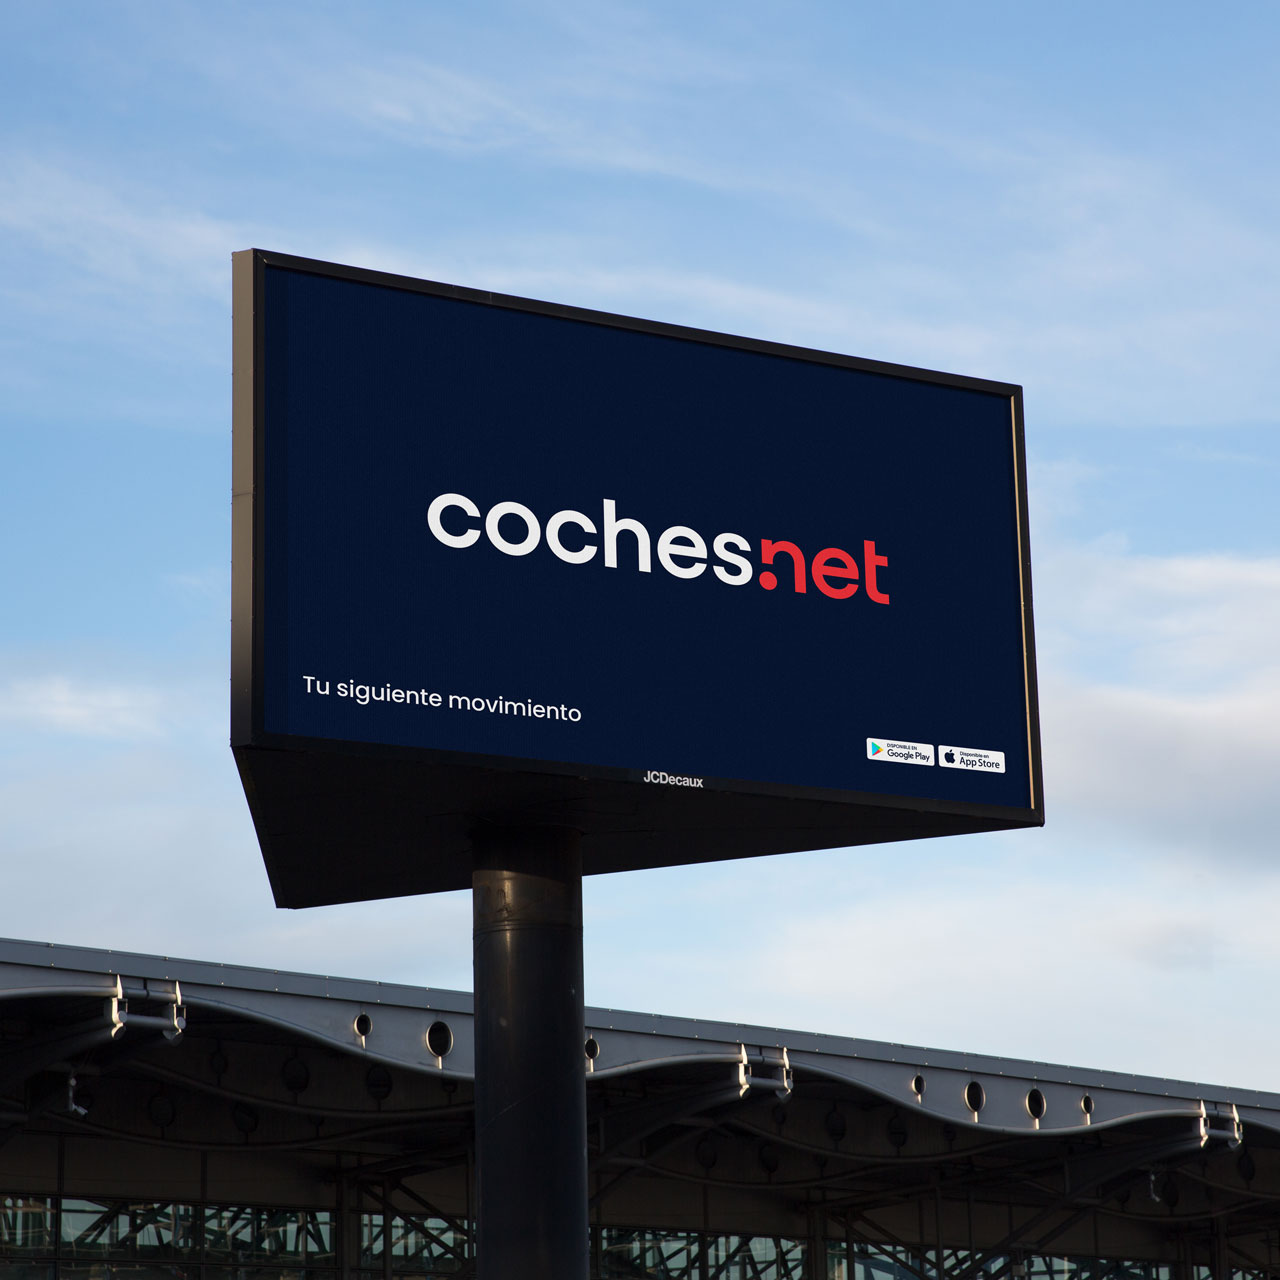 CochesNET_billboard-2